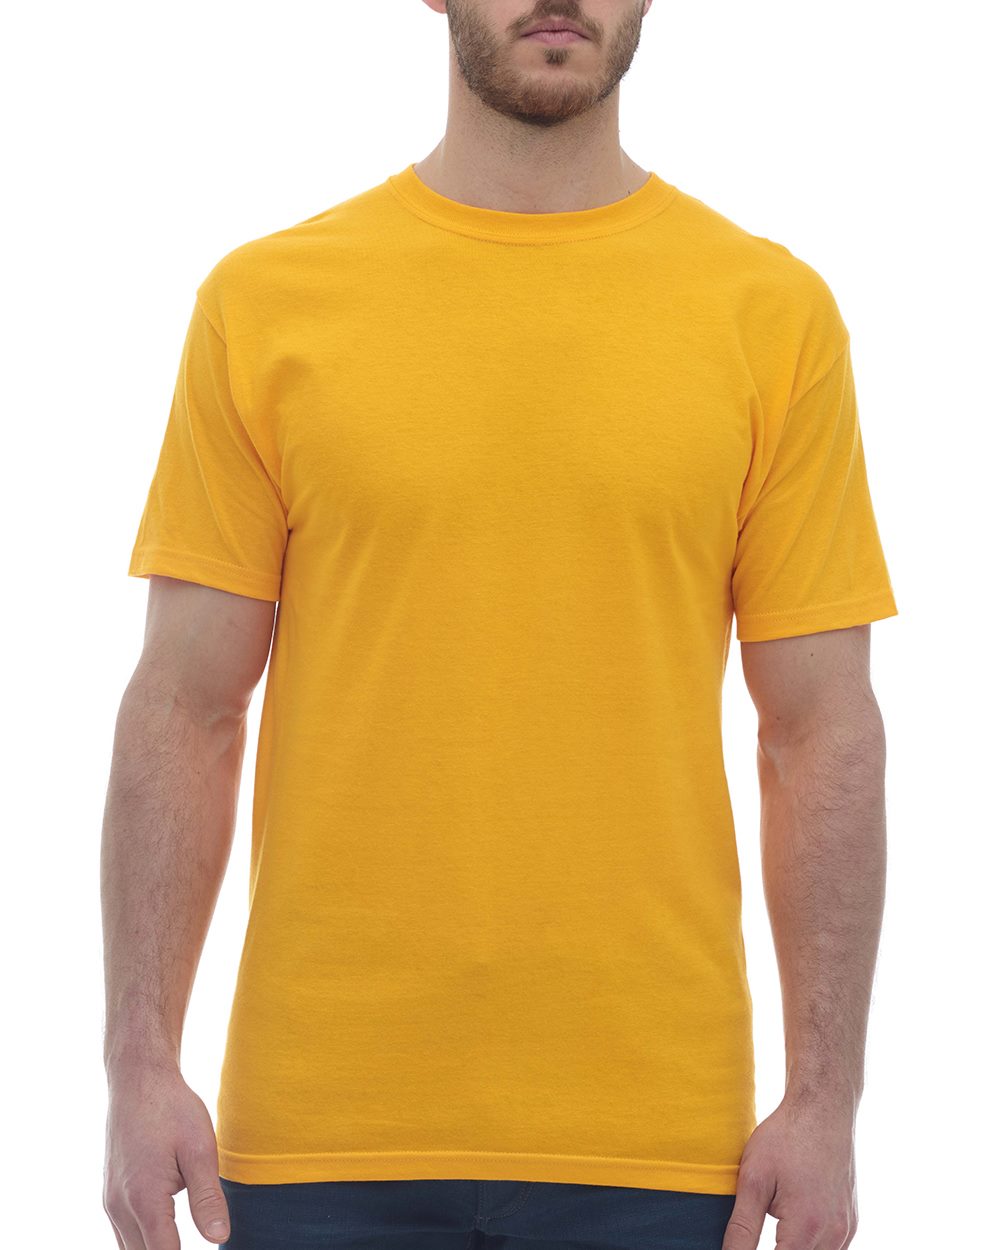 M&O 4800 - Gold Soft Touch T-Shirt